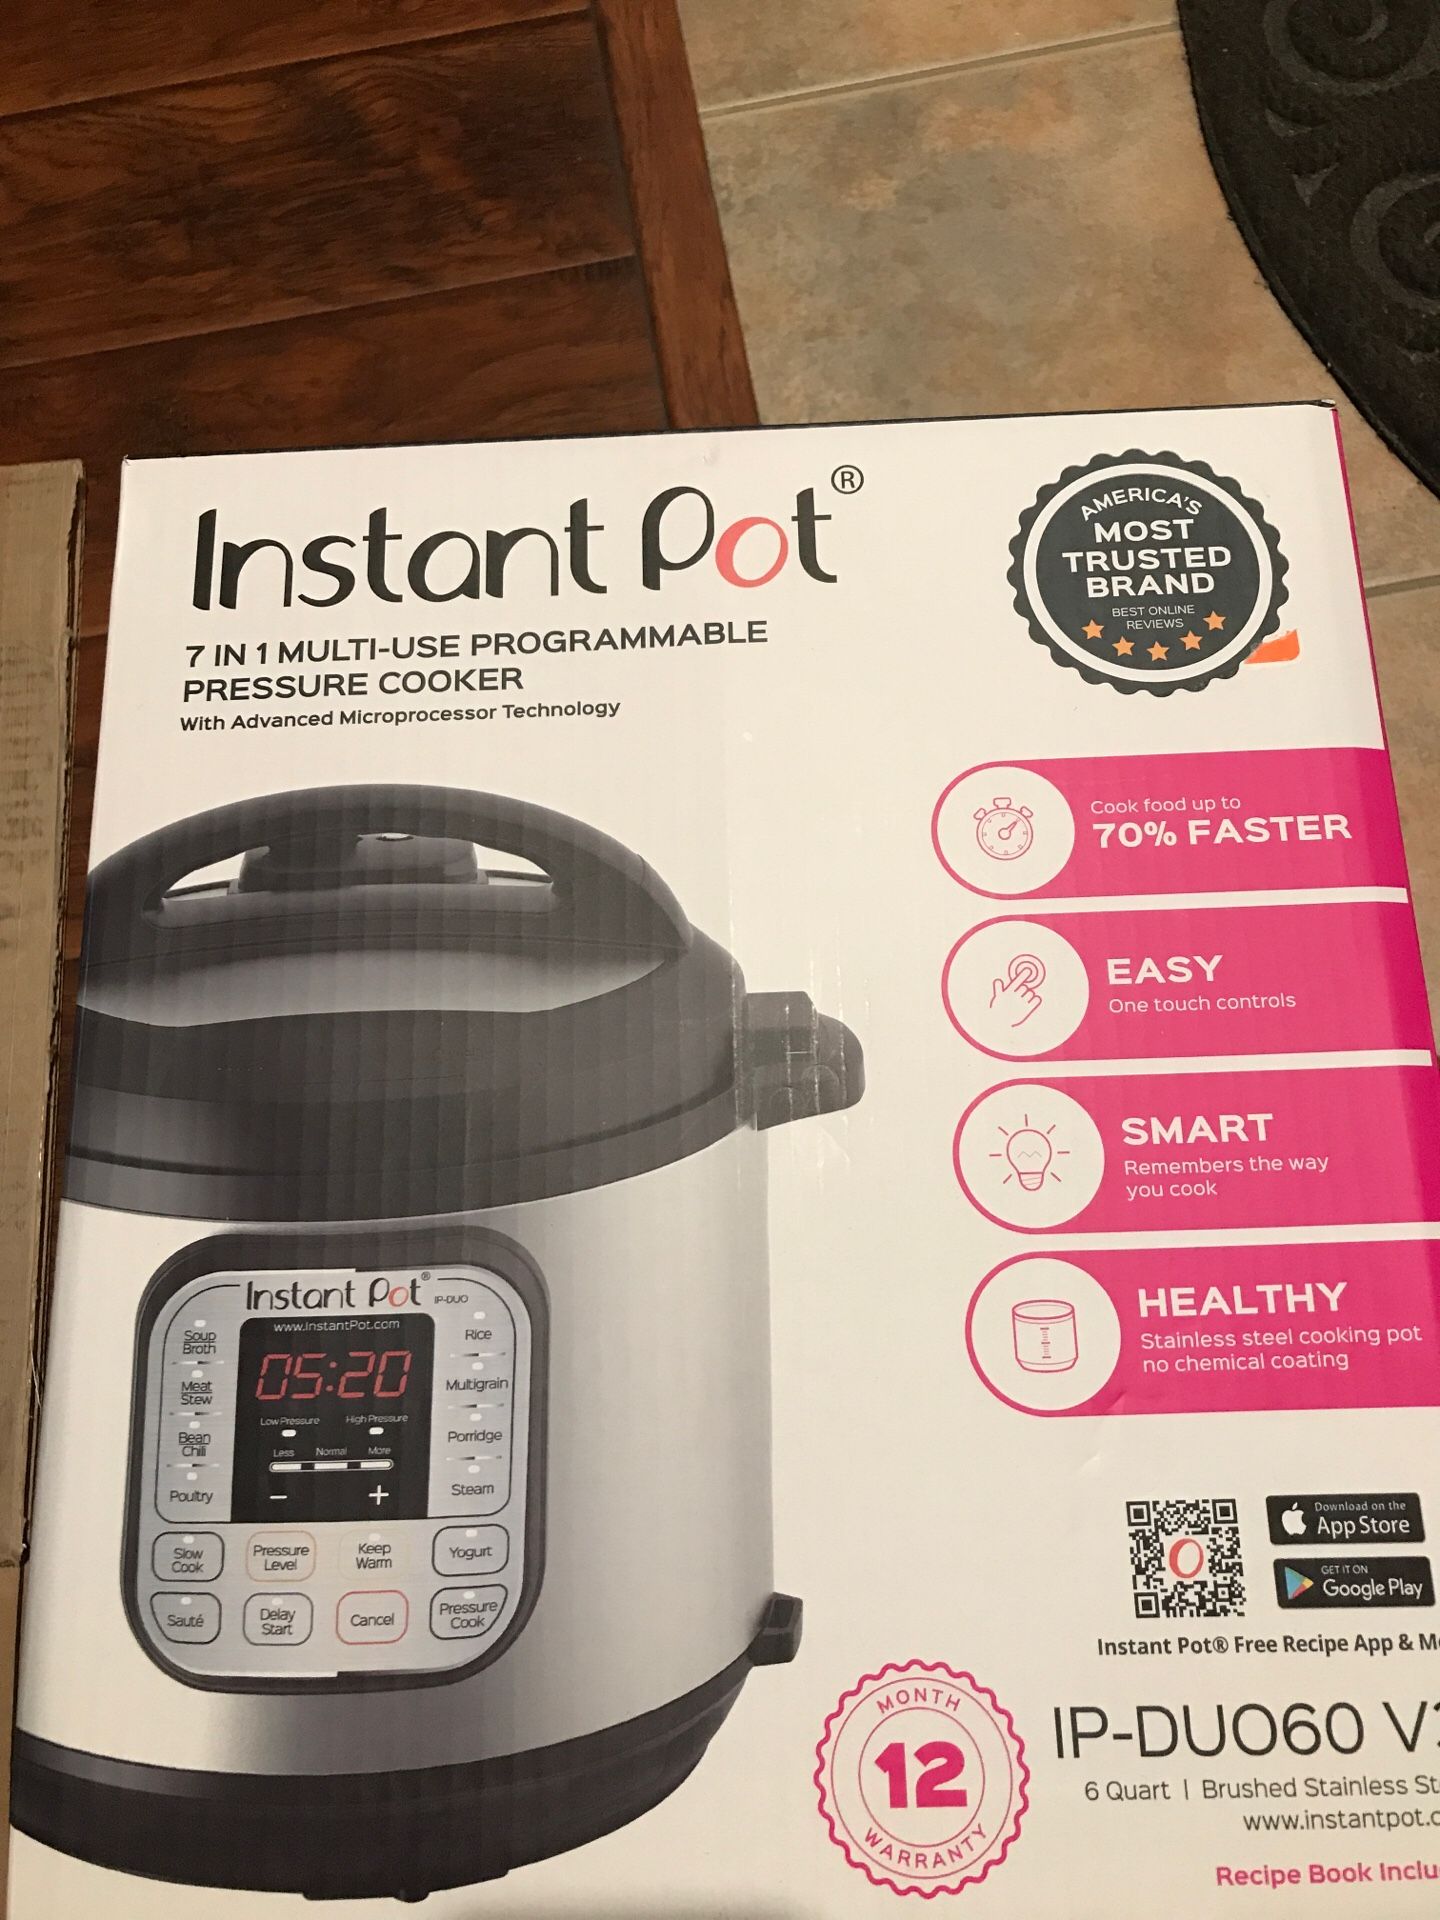 Instant Pot 7 in 1 multi-use pressure cooker